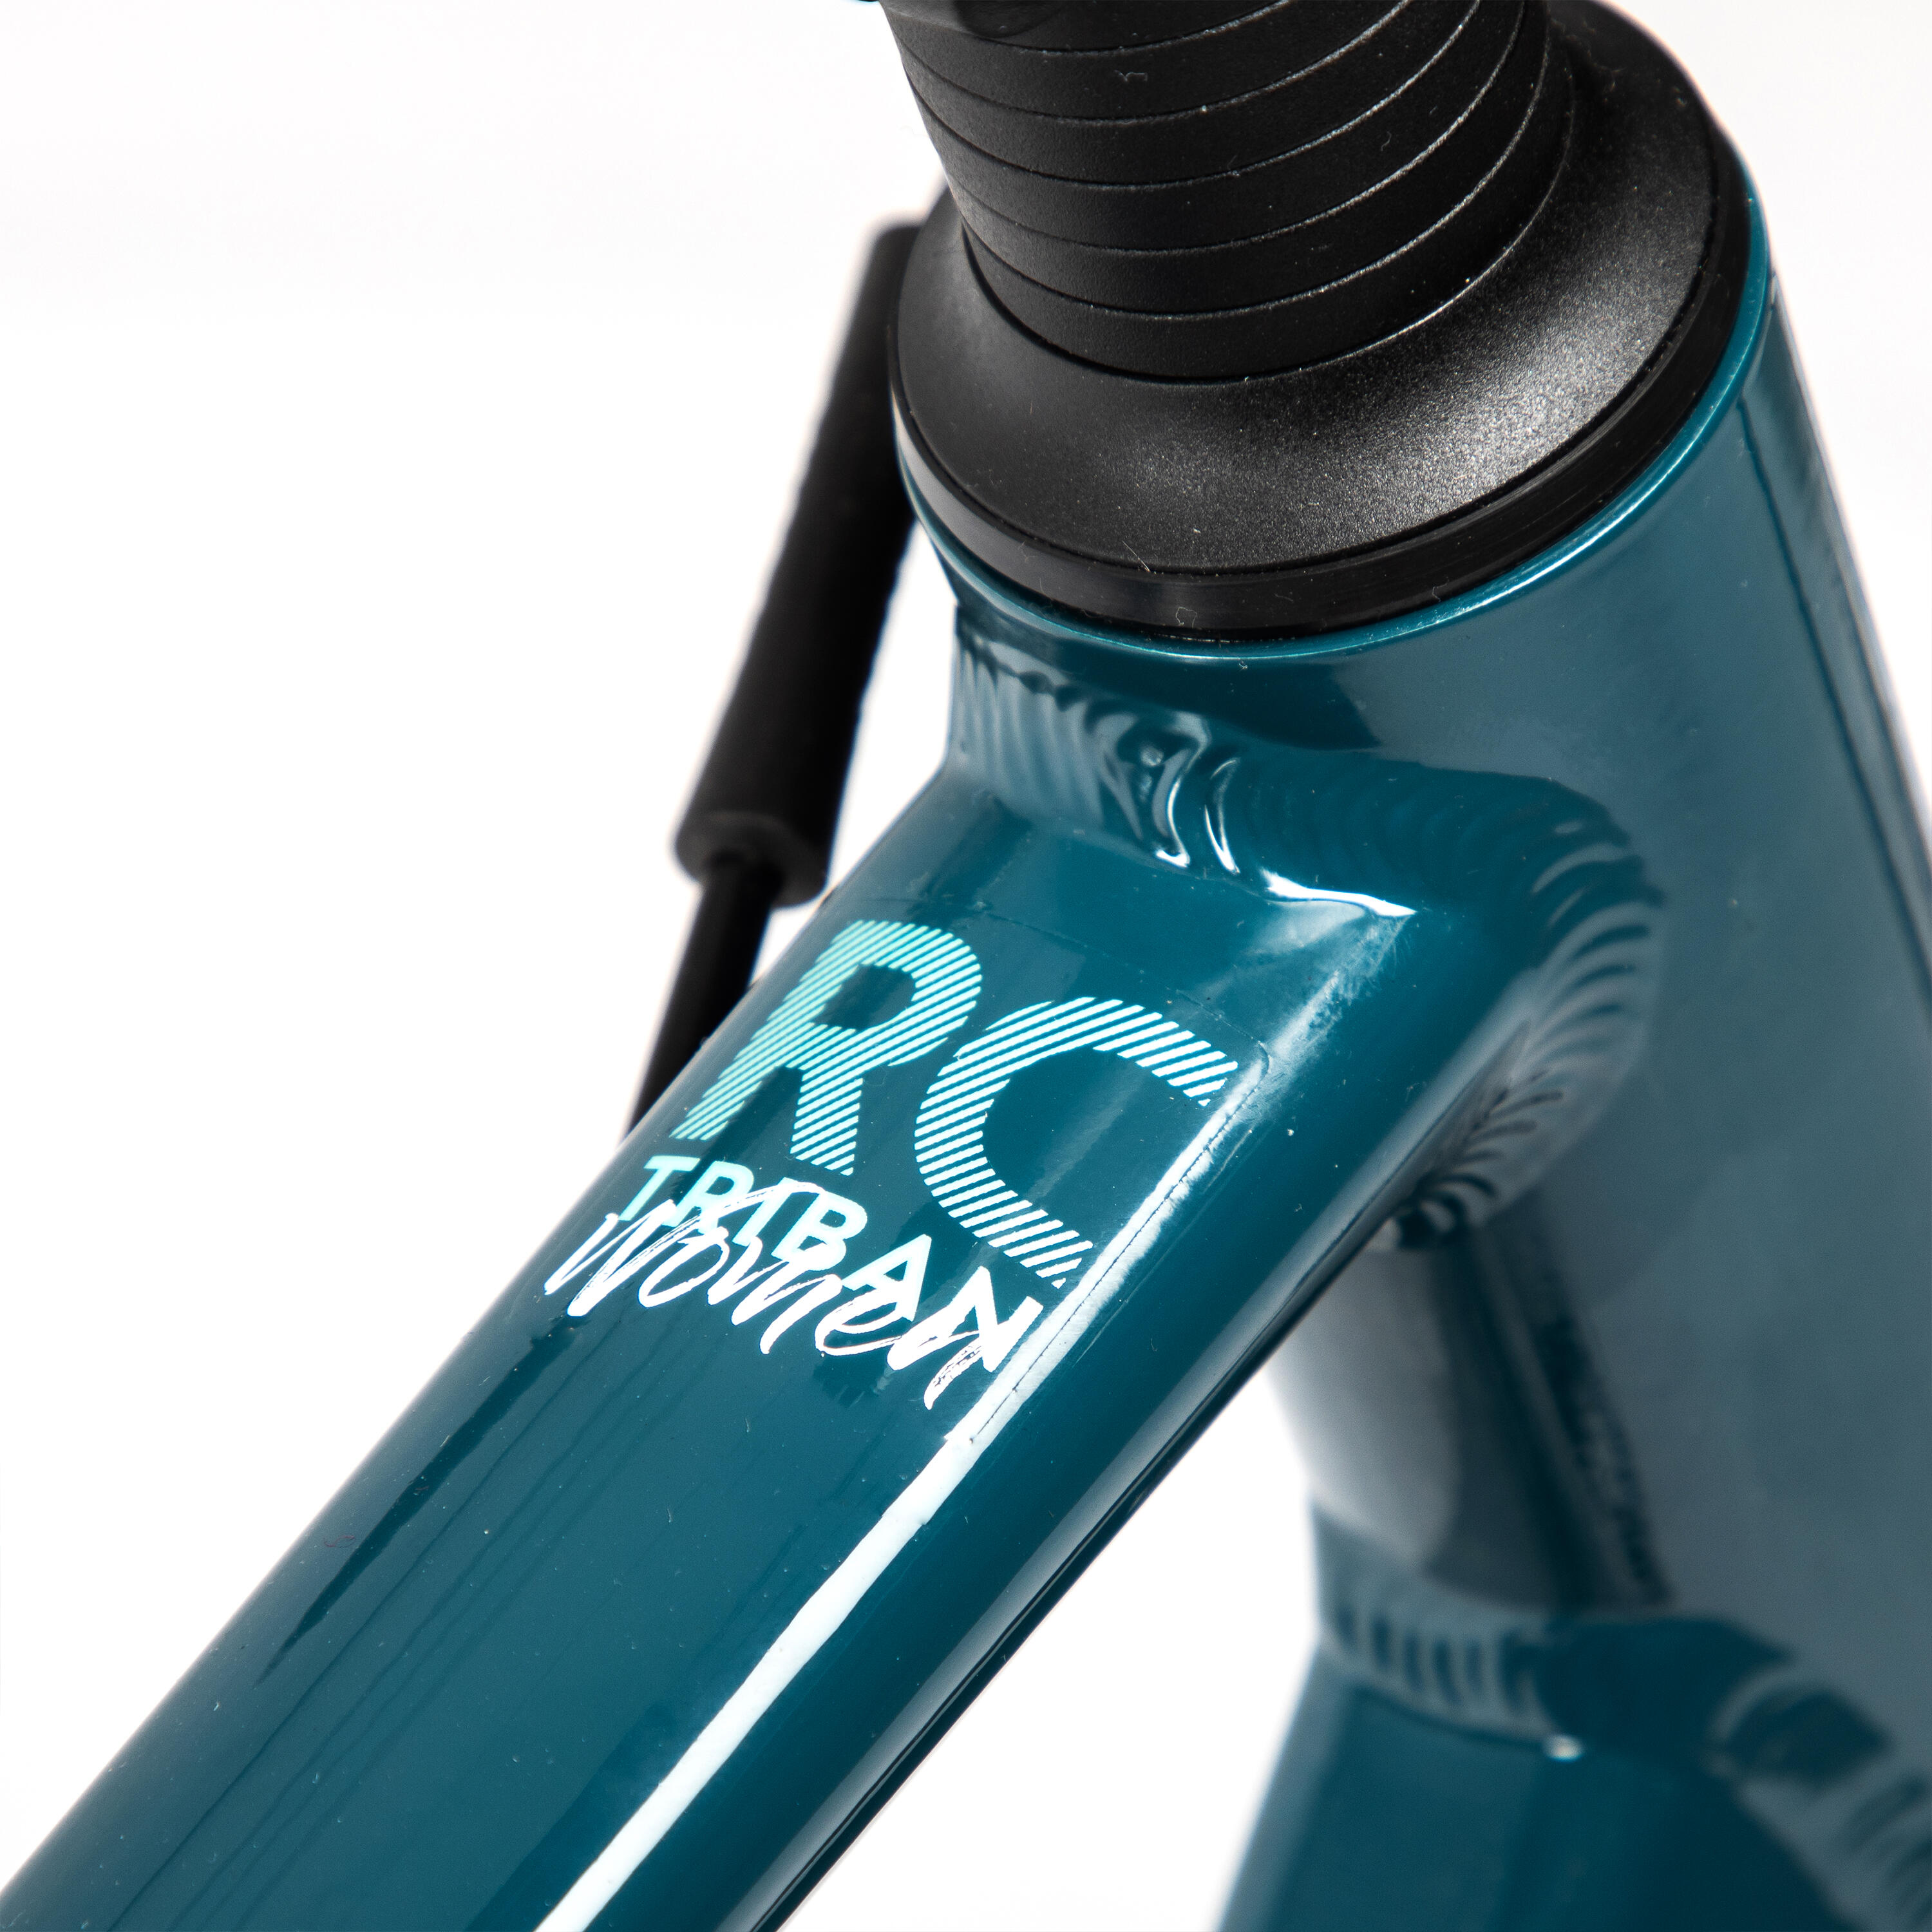 Women's road bike triban rc 500 - Petrol Blue 10/10